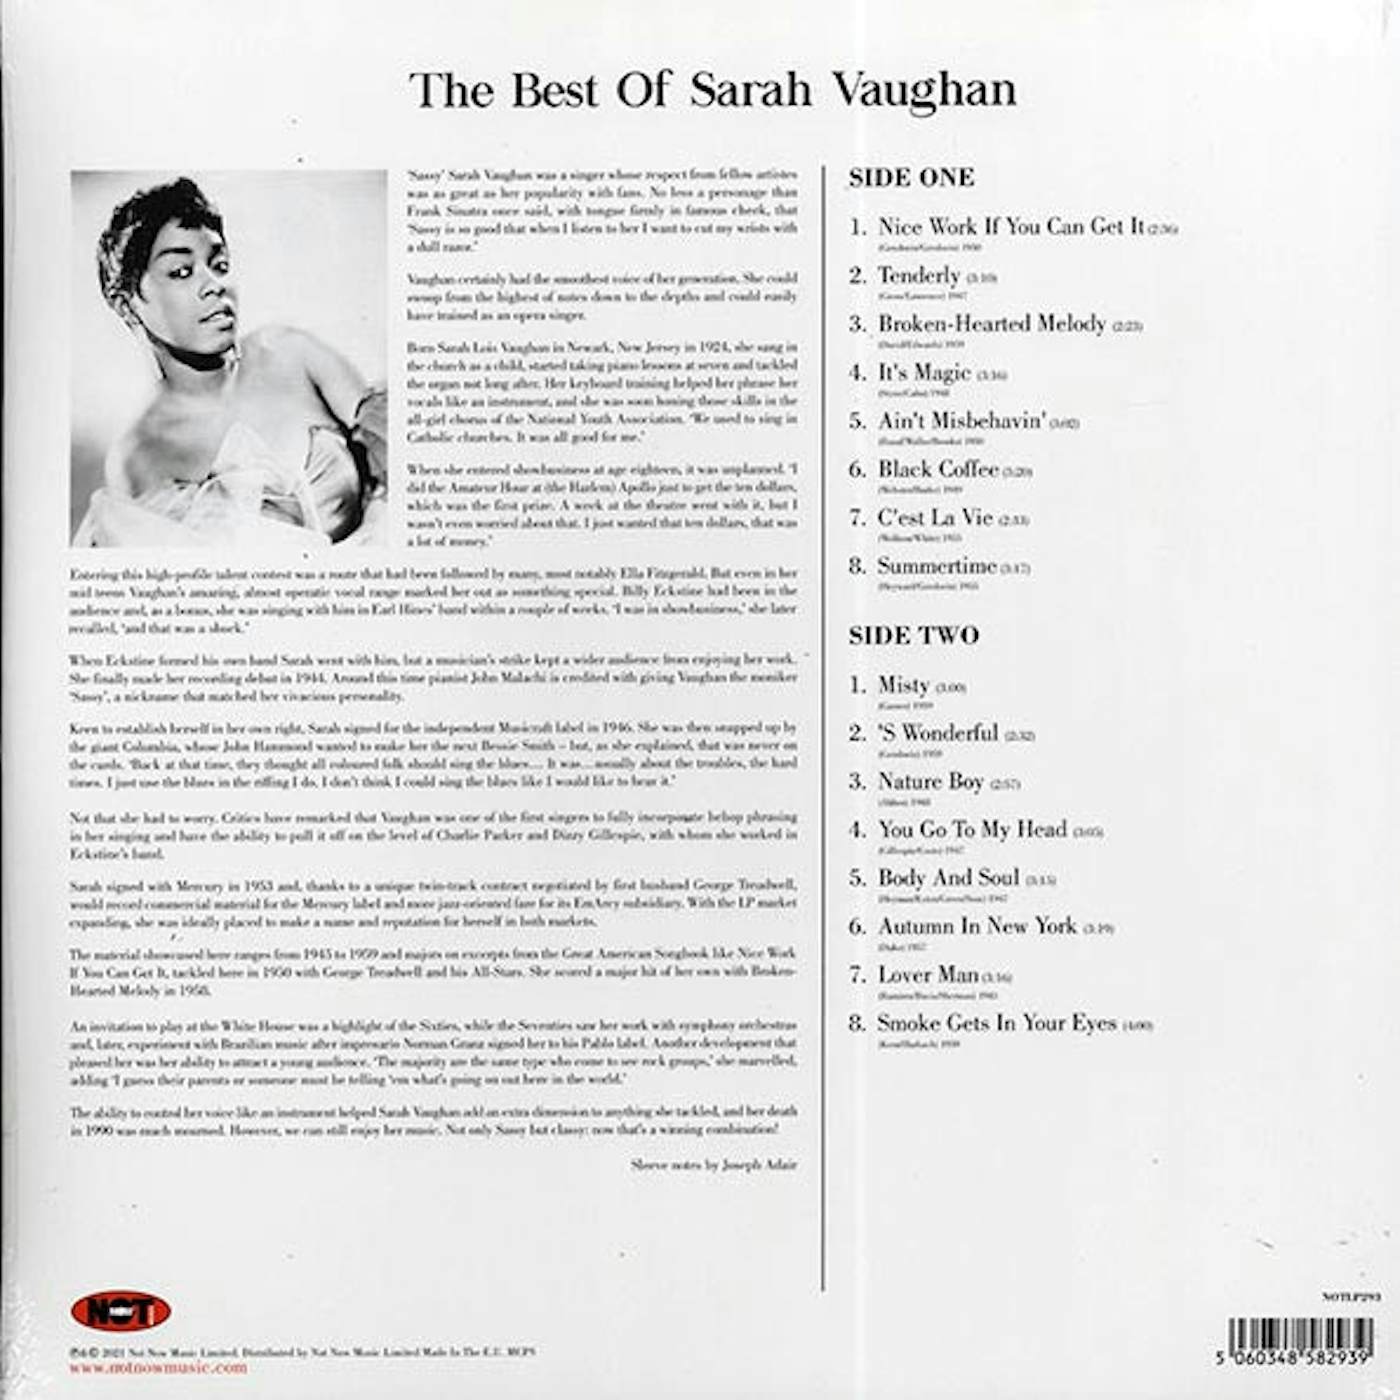 Sarah Vaughan  LP -  The Best Of Sarah Vaughan (180g) (blue vinyl)